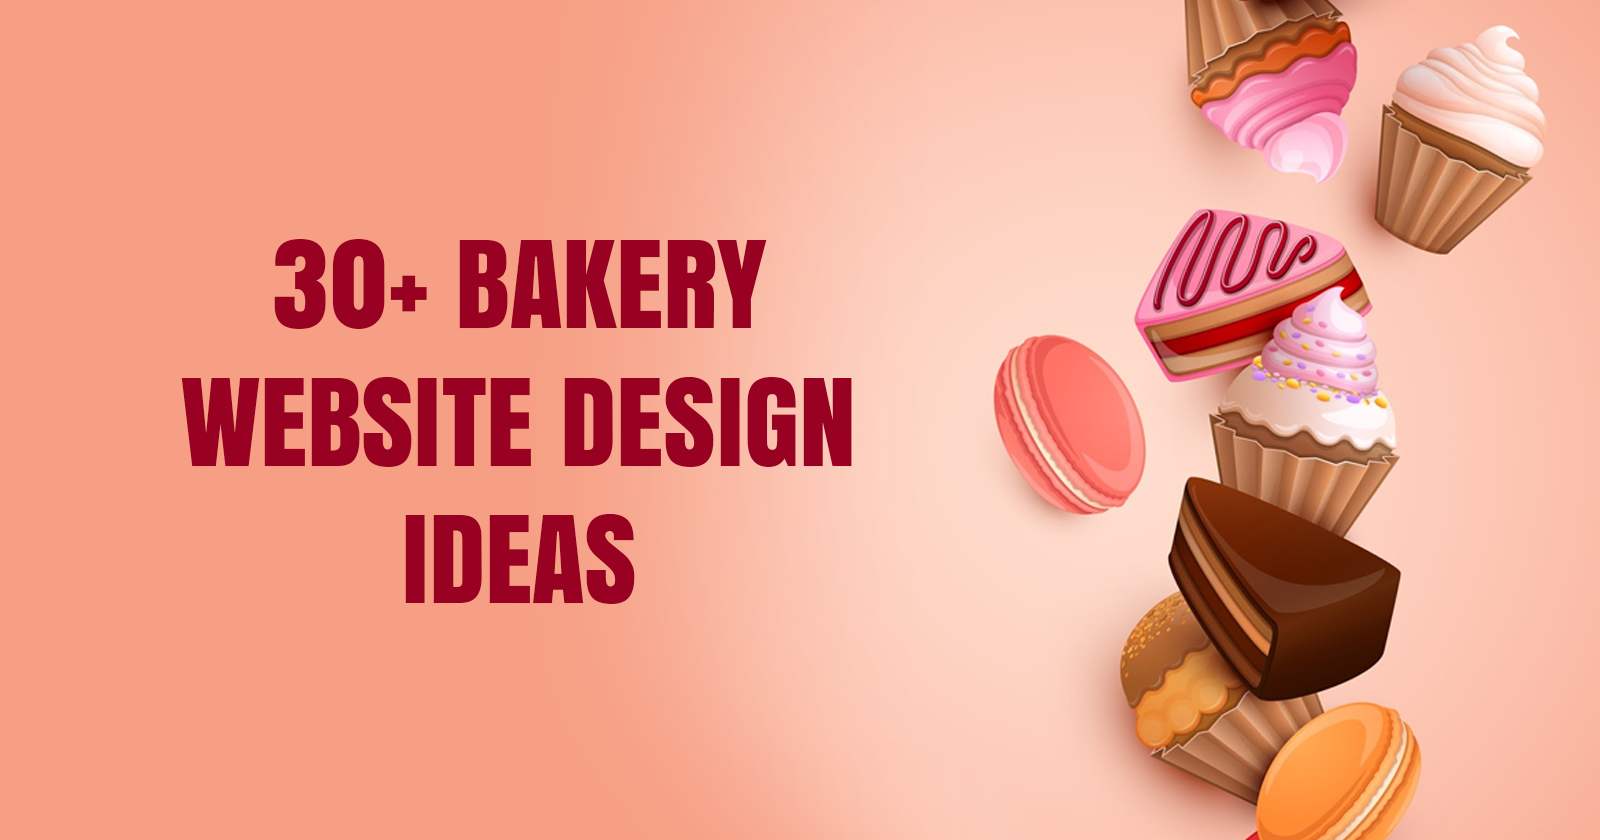 Top Bakery Website Design Ideas